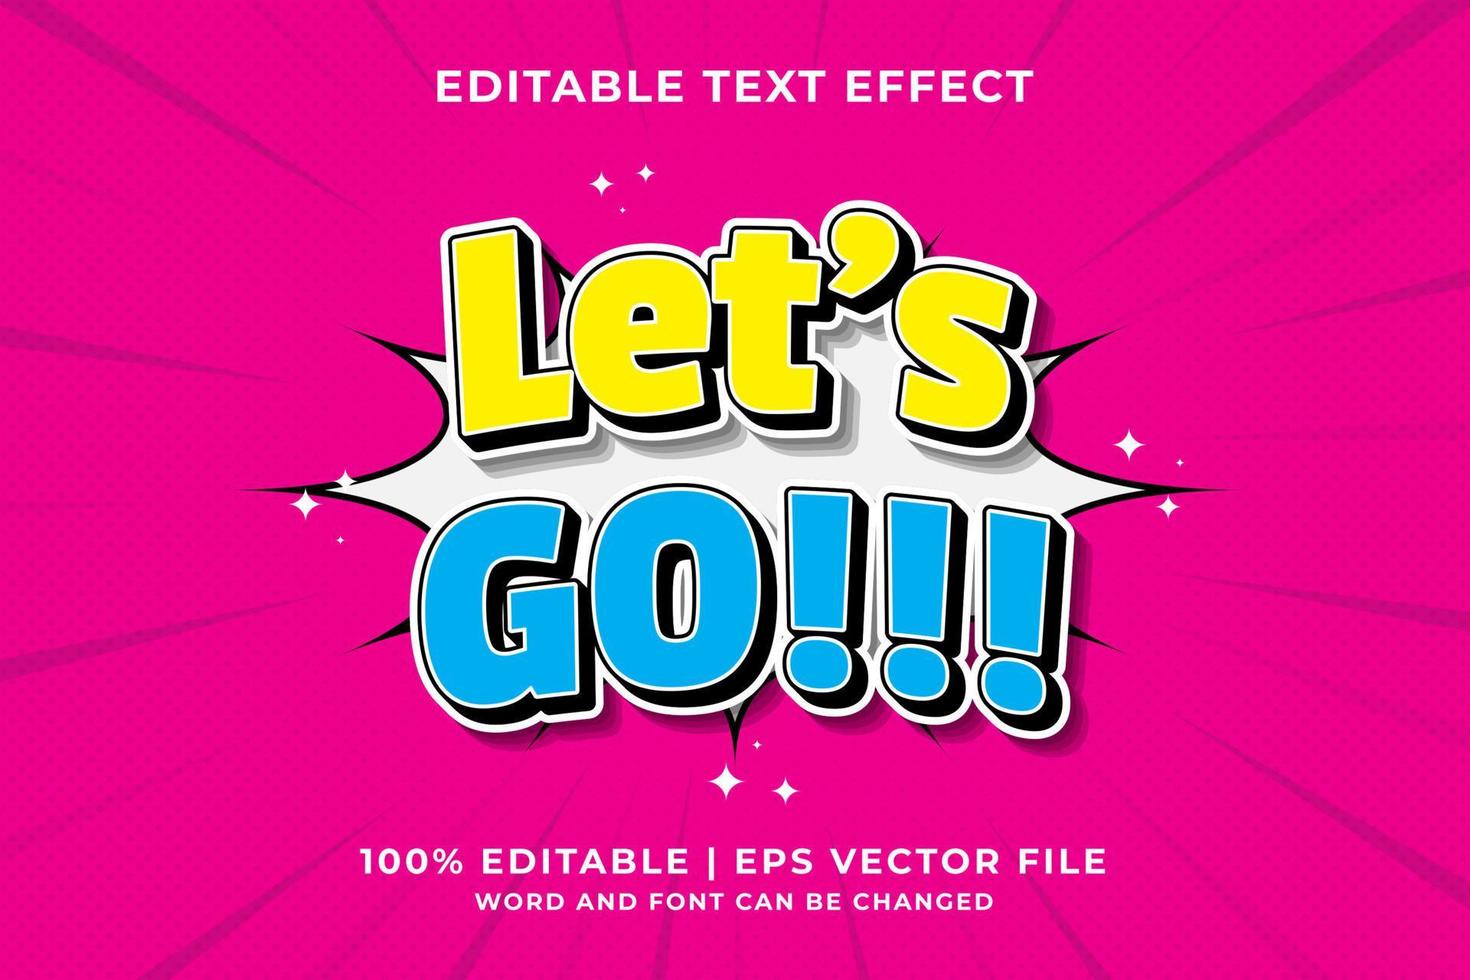 editierbarer texteffekt - let's go cartoon template style premium vector